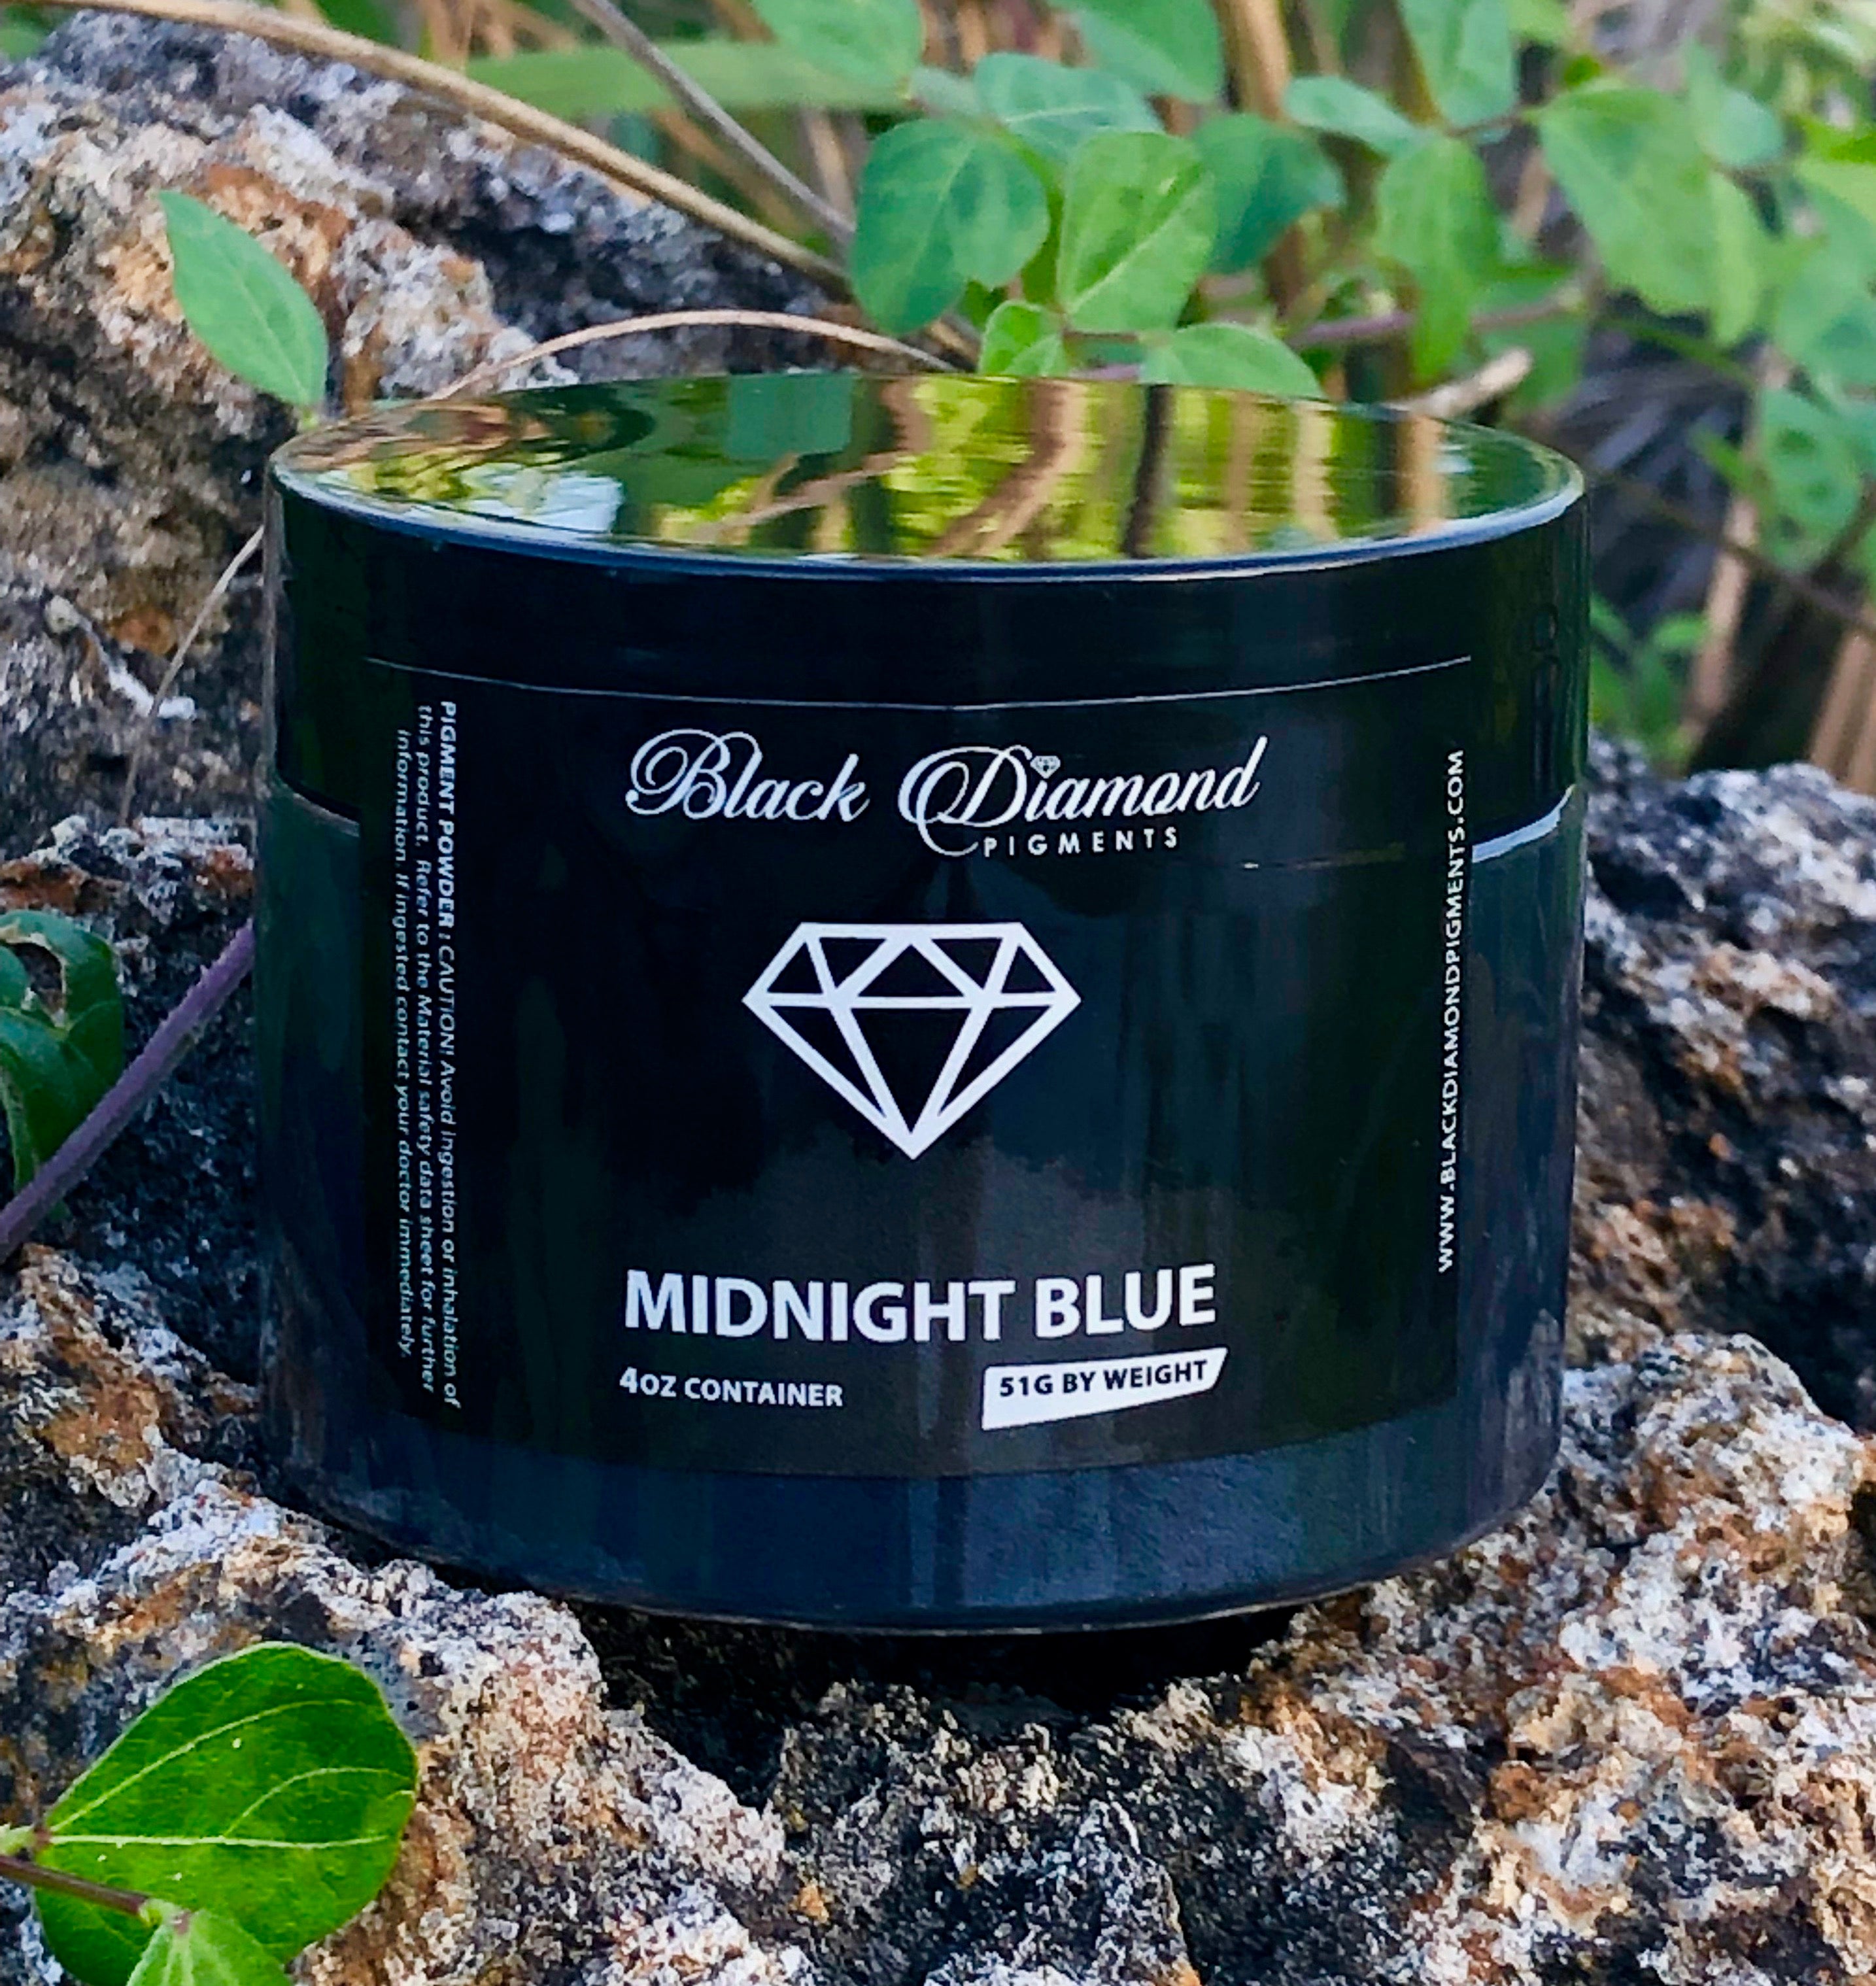 "MIDNIGHT BLUE" Black Diamond Pigments